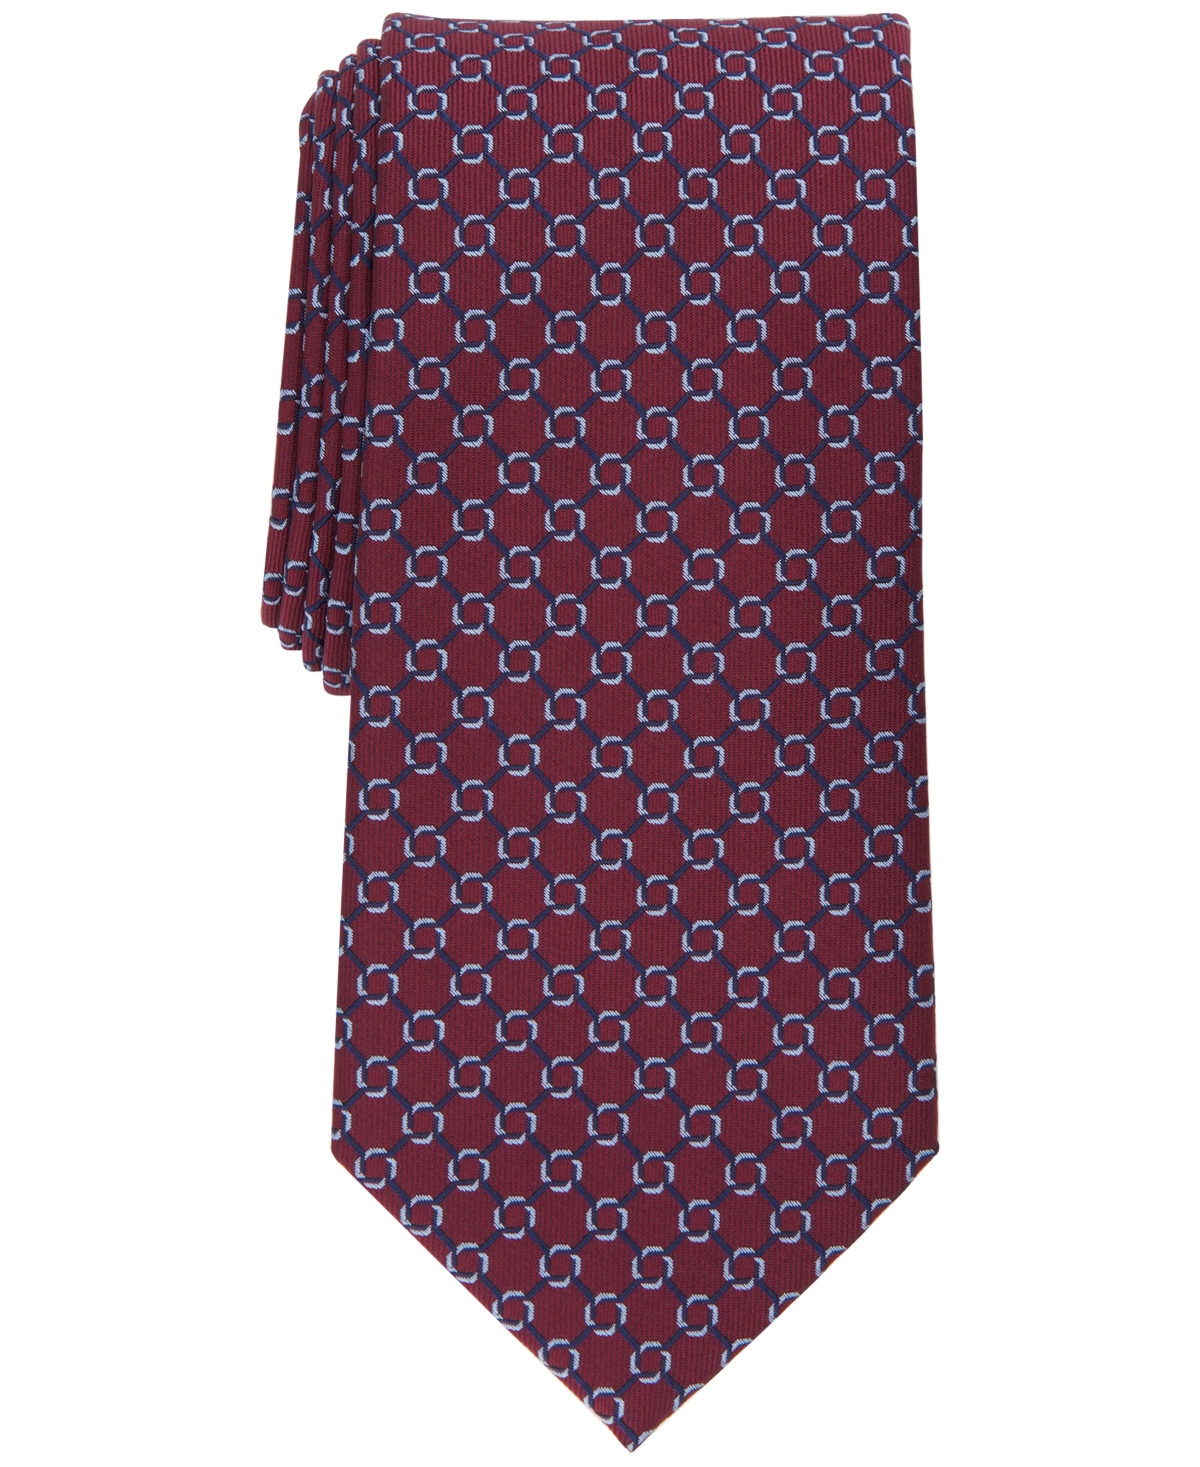 Men's Perez Medallion Tie, Created for Macy's - Burgundy